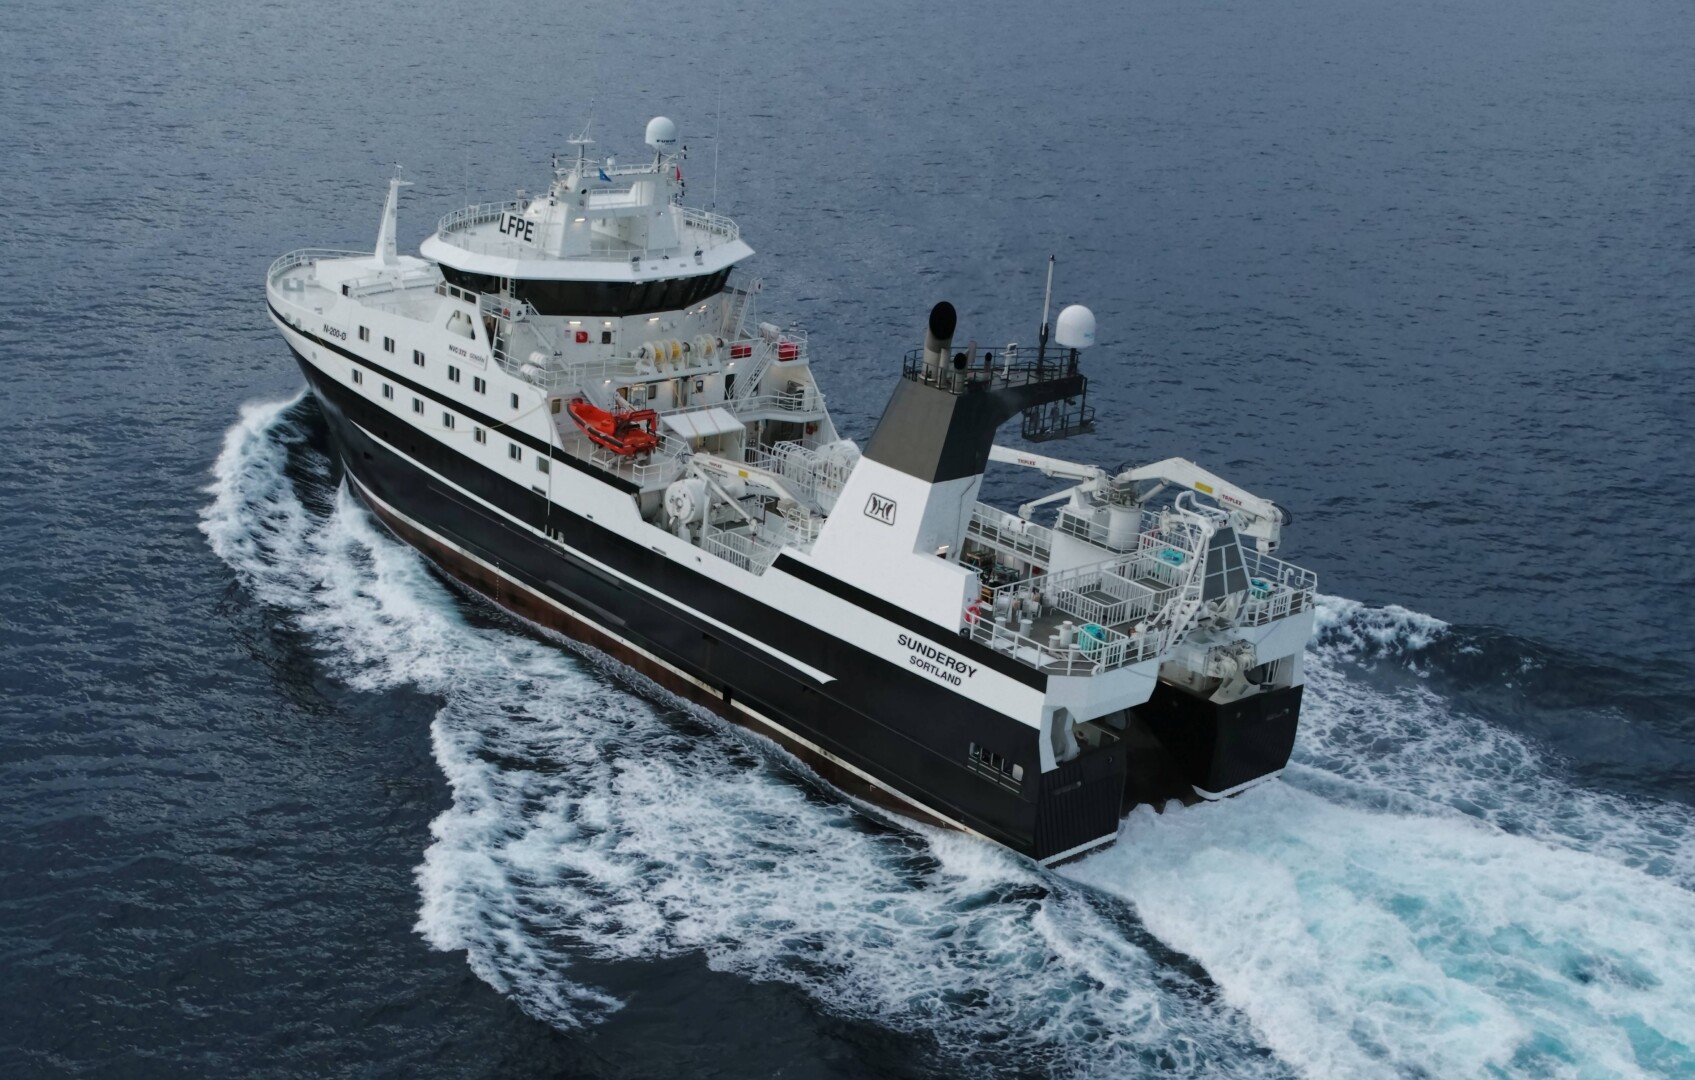 GONDAN delivered new Fishing Stern Trawler: Sunderøy